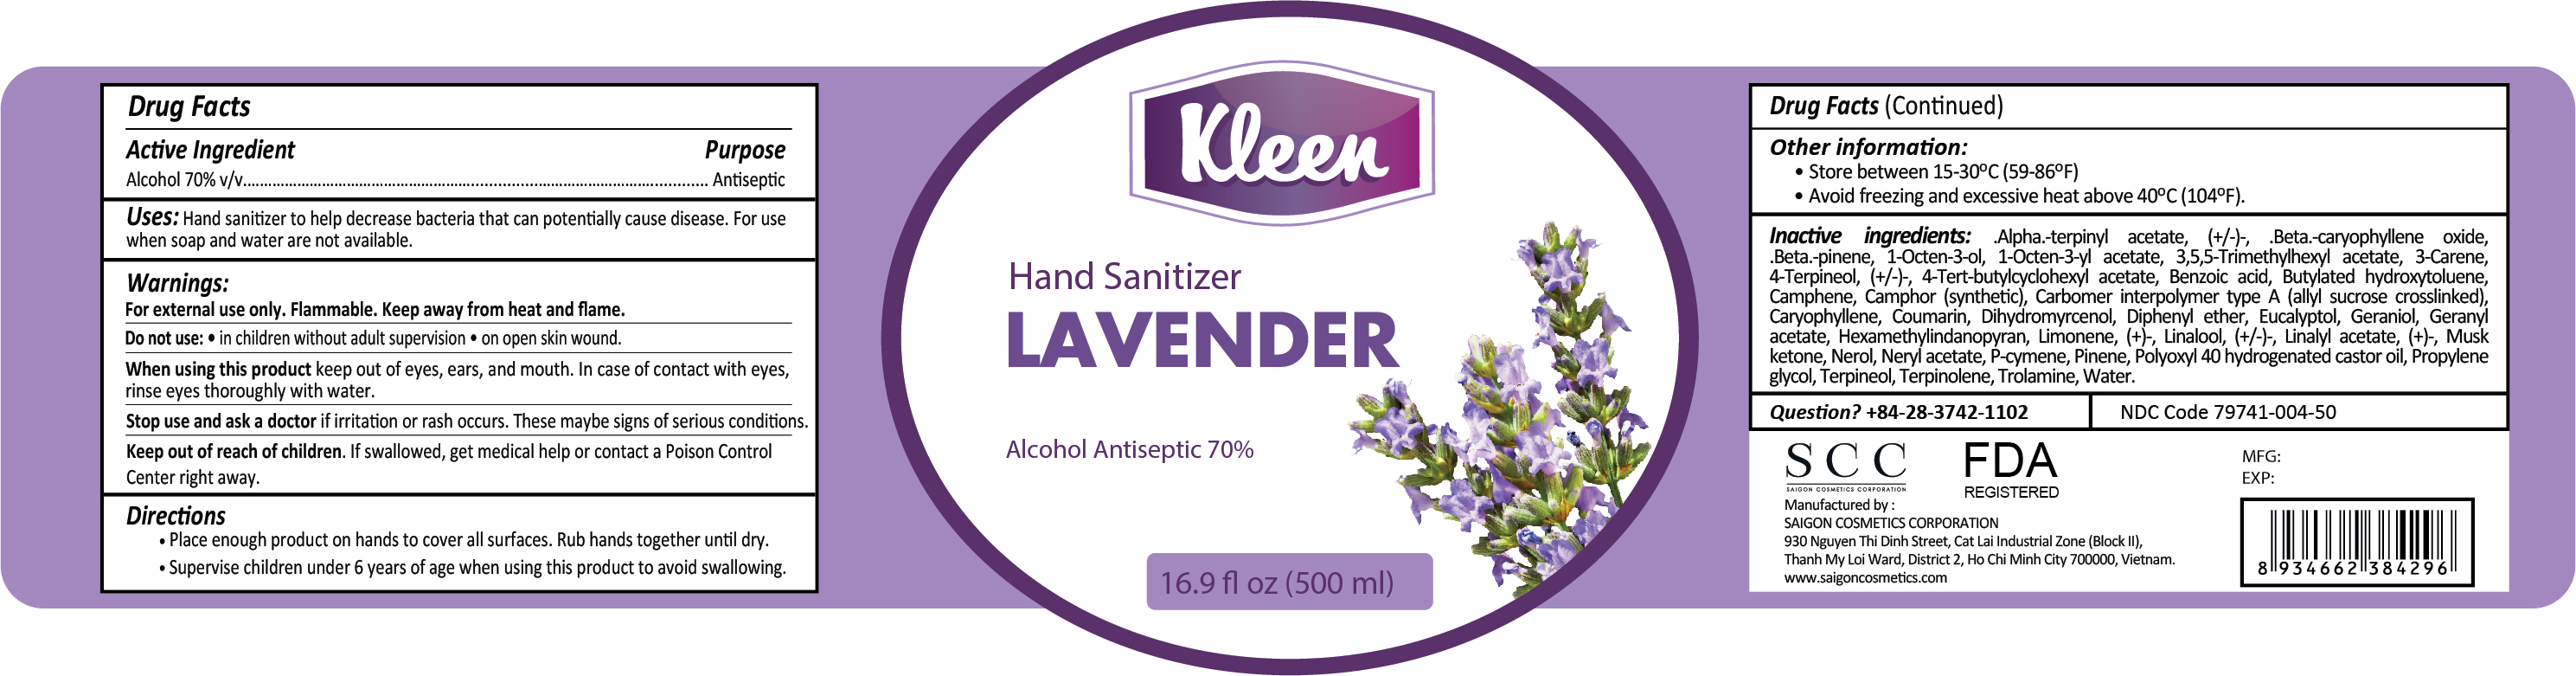 Kleen Hand Sanitizer Lavender 500ml Label